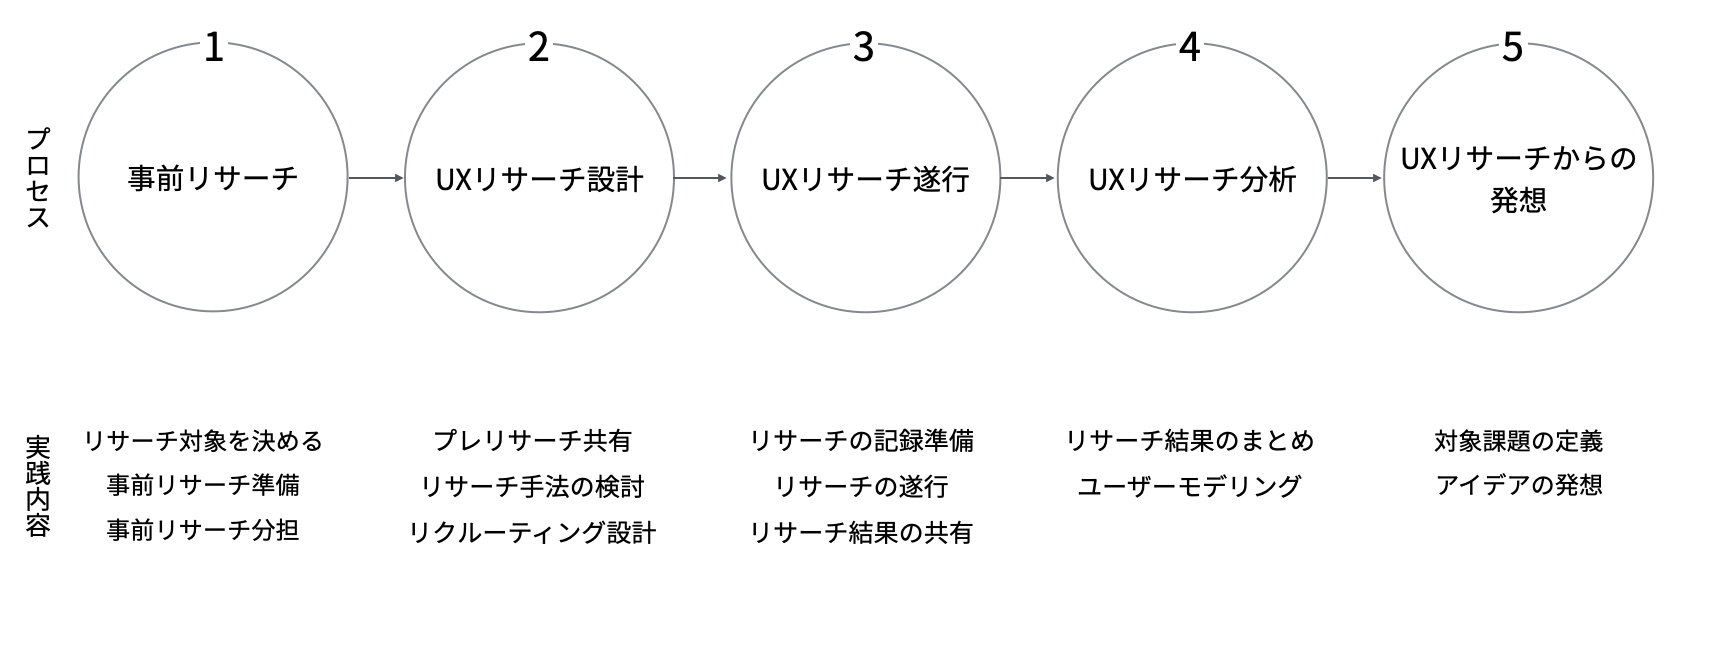 UXデザイン検収の流れの図。プロセスは、「事前リサーチ」「UXリサーチ設計」「UXリサーチ遂行」「UXリサーチ分析」「UXリサーチからの発送」の全5回。